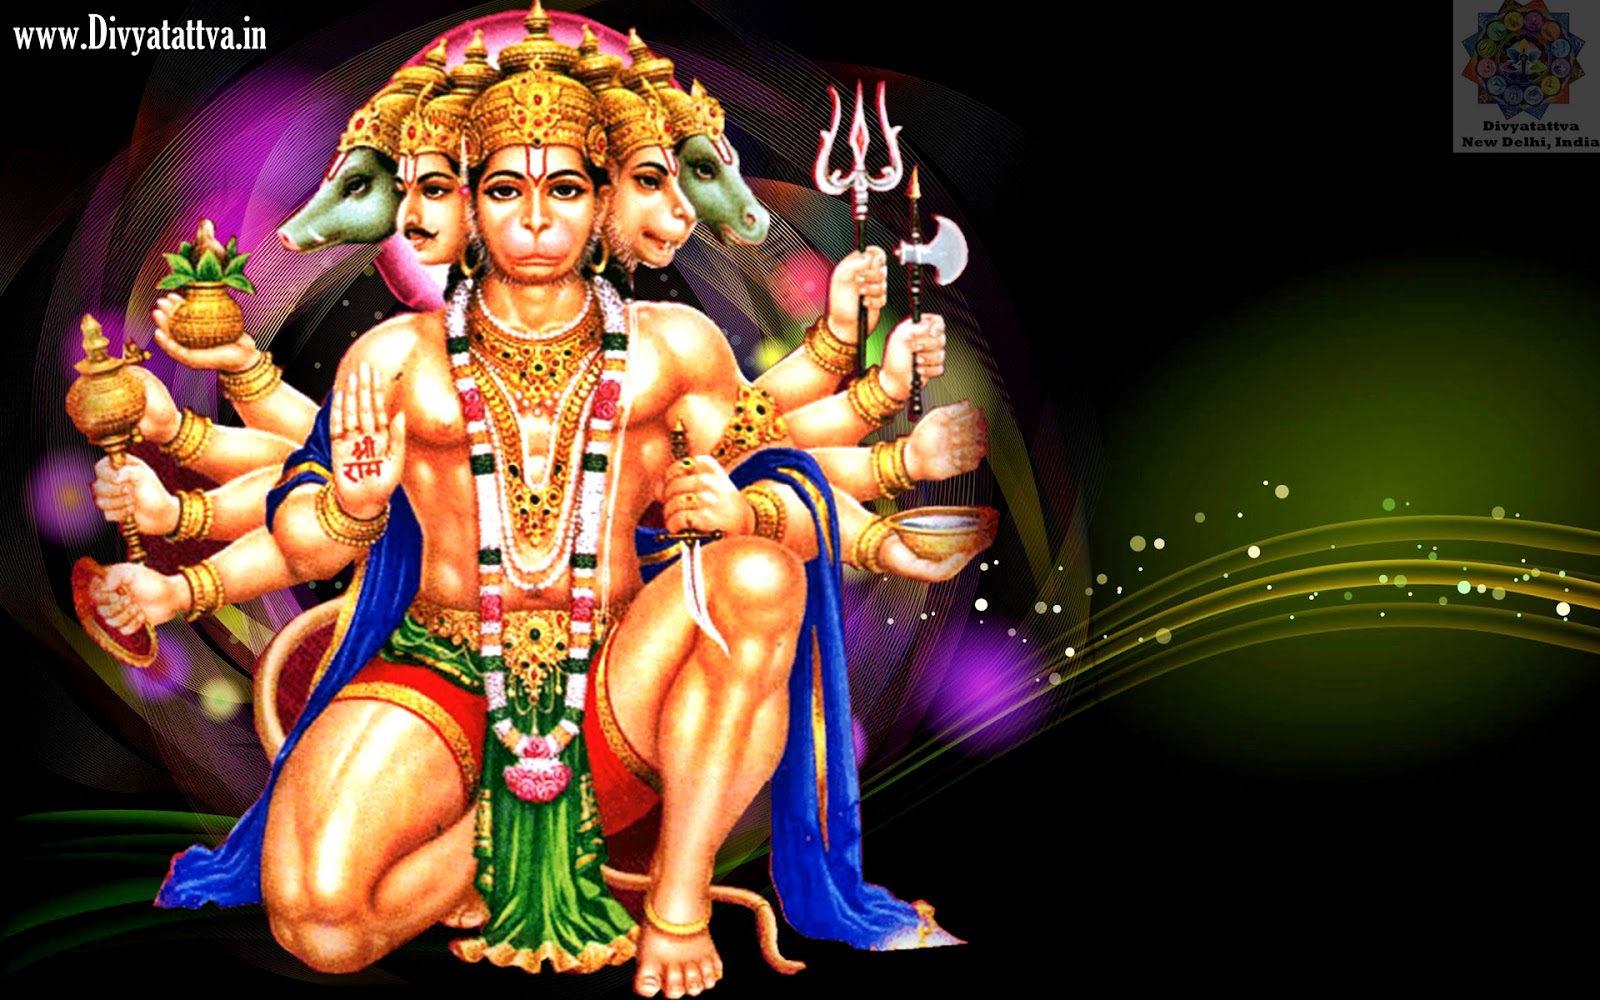 Divyatattva Astrology Free Horoscopes Psychic Tarot Yoga Tantra Occult Images Videos Lord Hanuman Hd Wallpaper Bajrang Bali Background Images